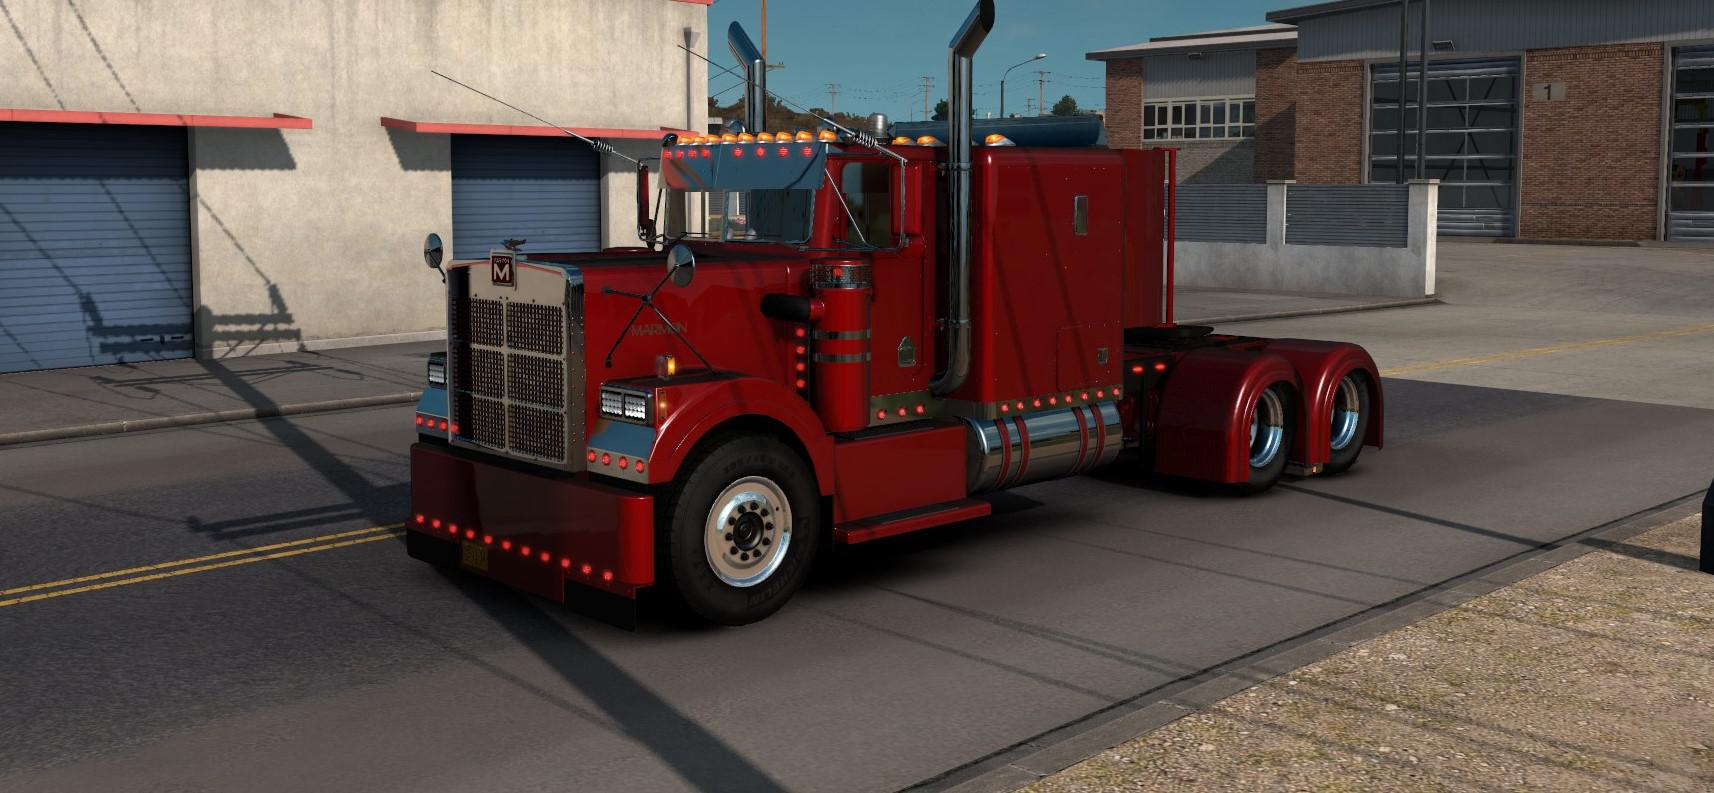 Ats Marmon Truck 139x American Truck Simulator Modsclub